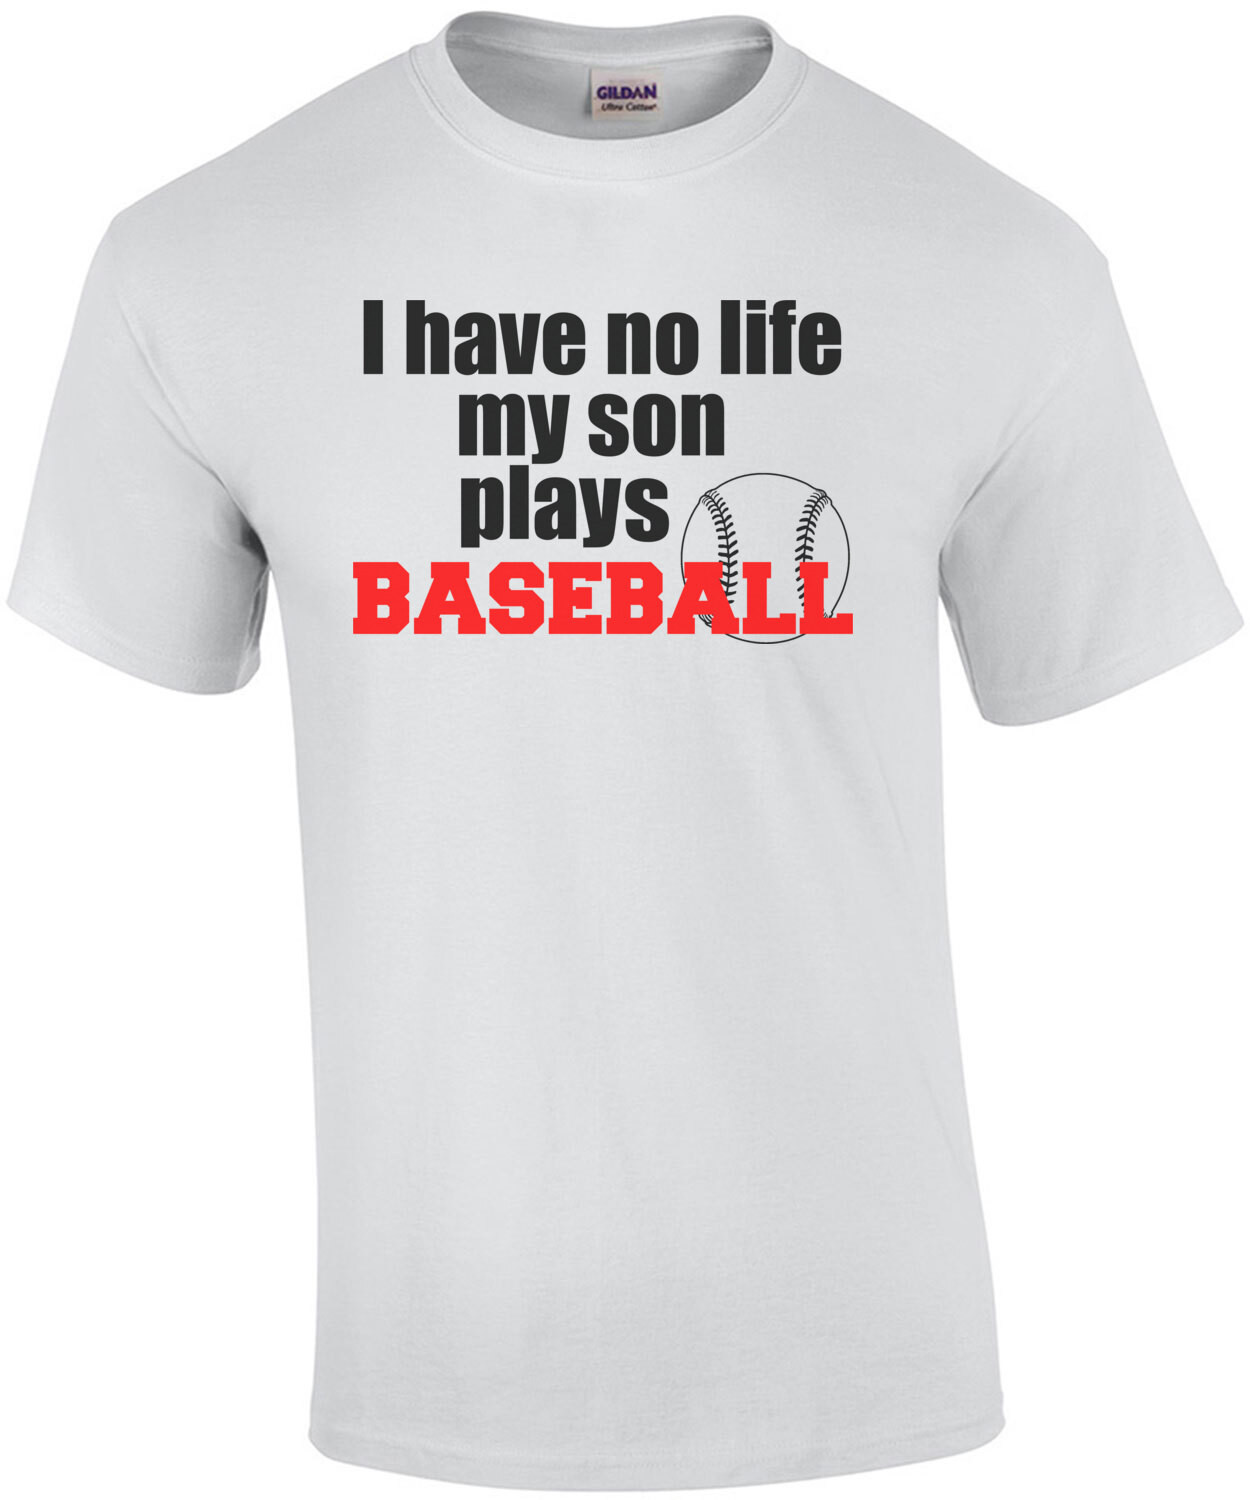 I have no life my son plays baseball